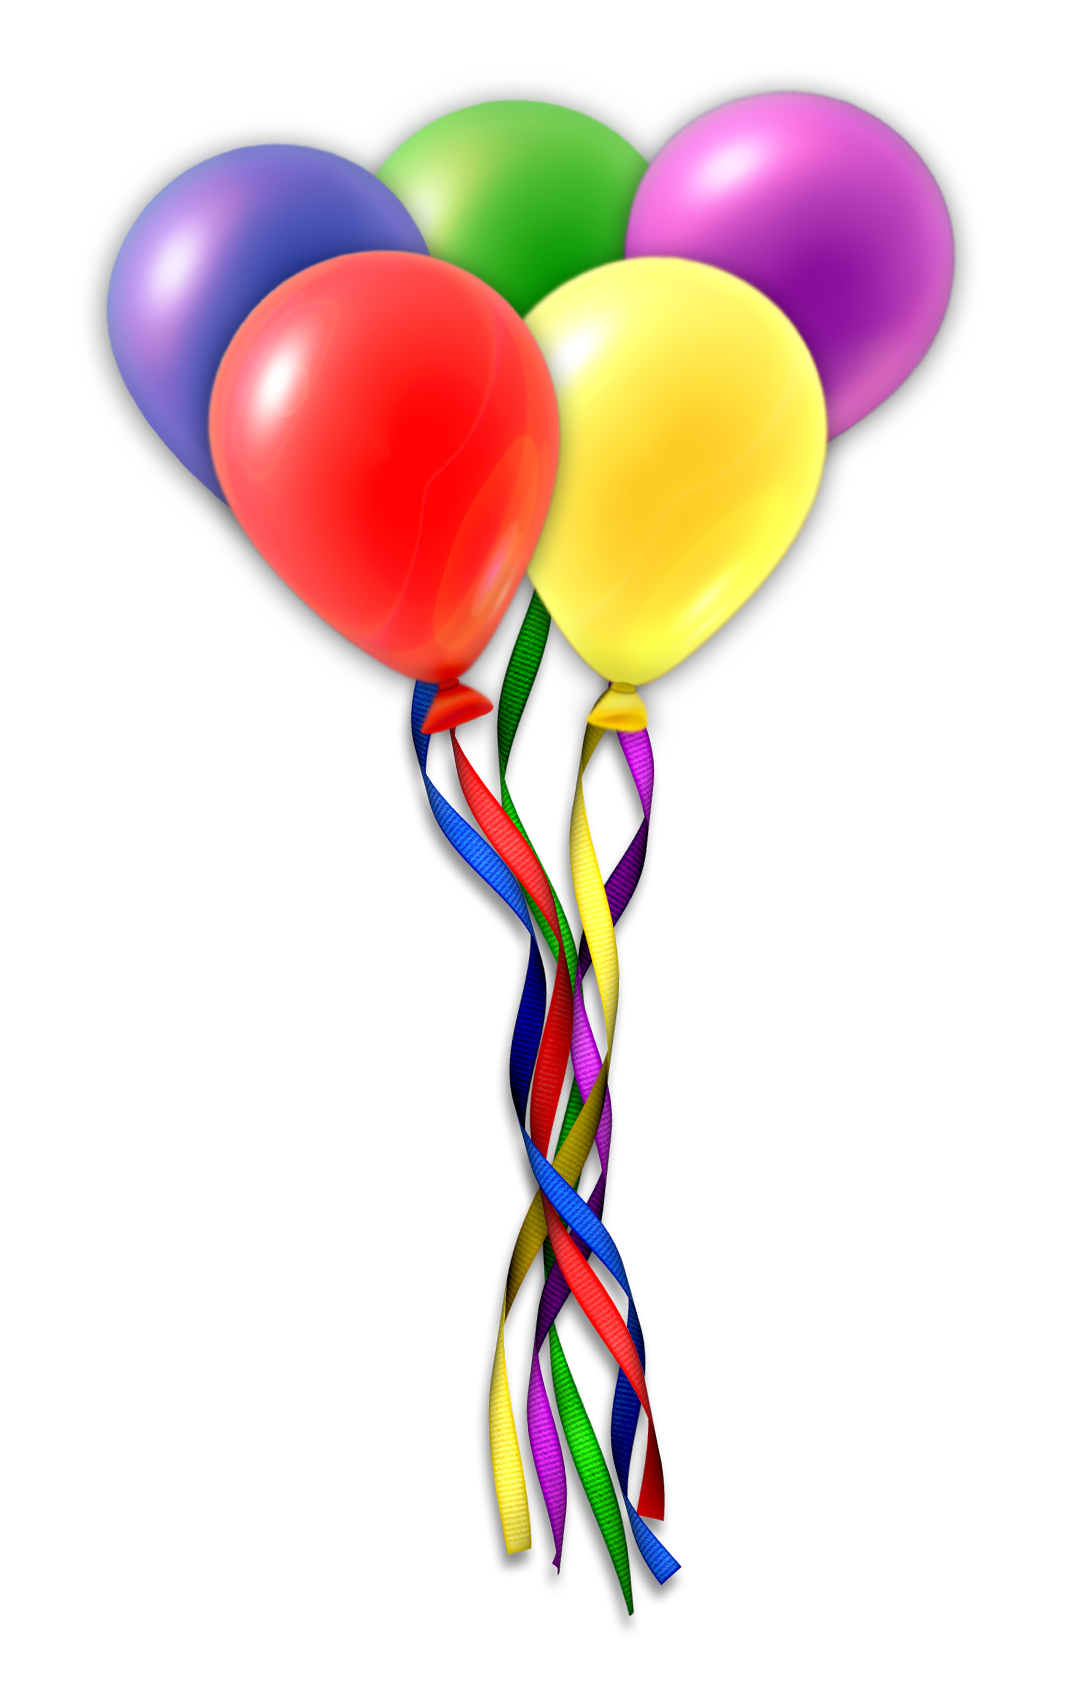 Download Balloons Transparent Background HQ PNG Image FreePNGImg